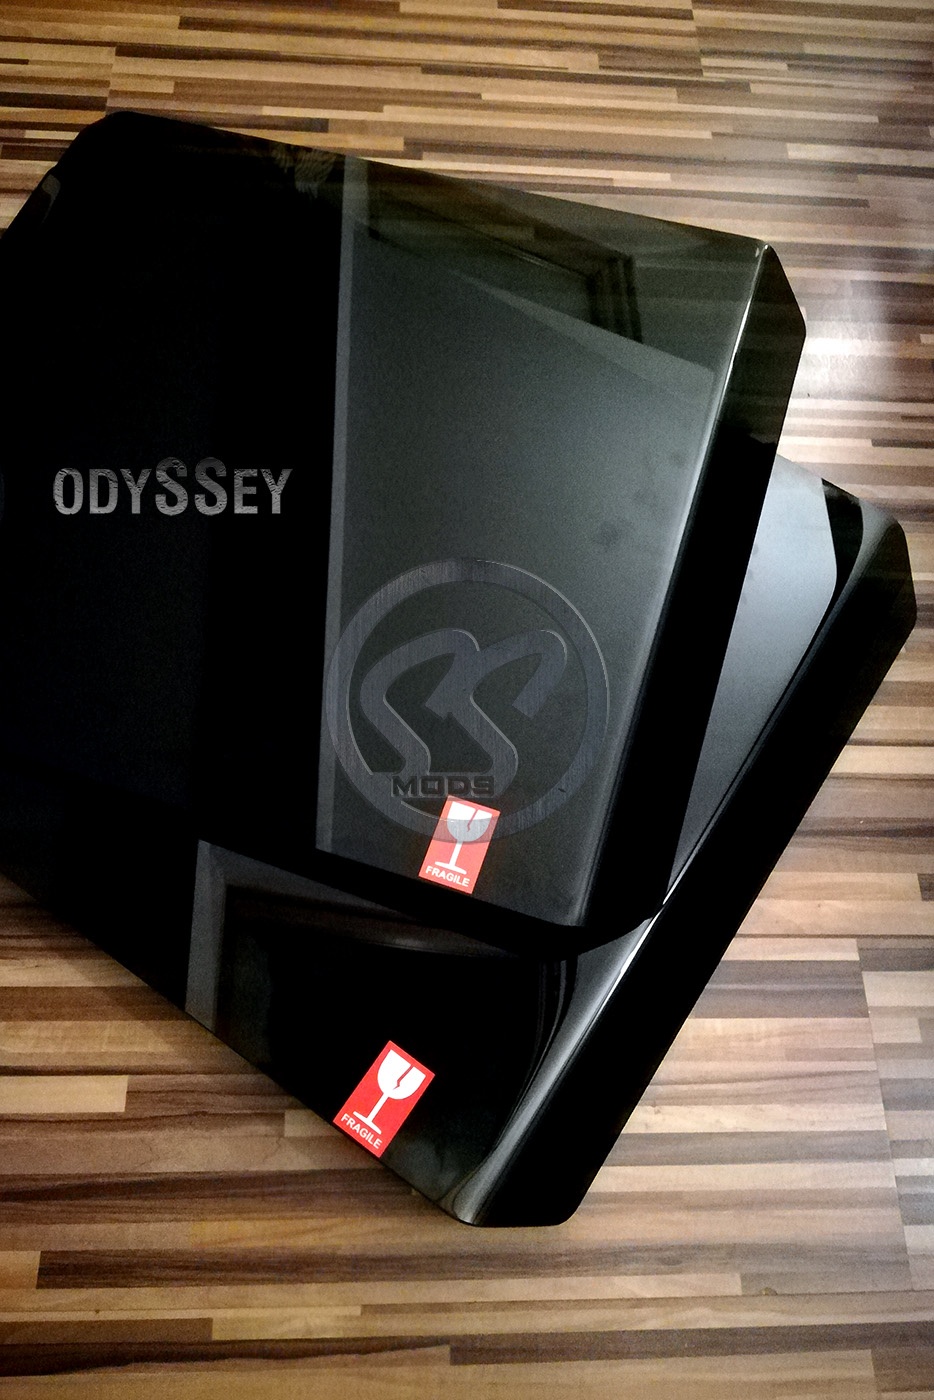 ODYSSEY-project-by-neSSa-087